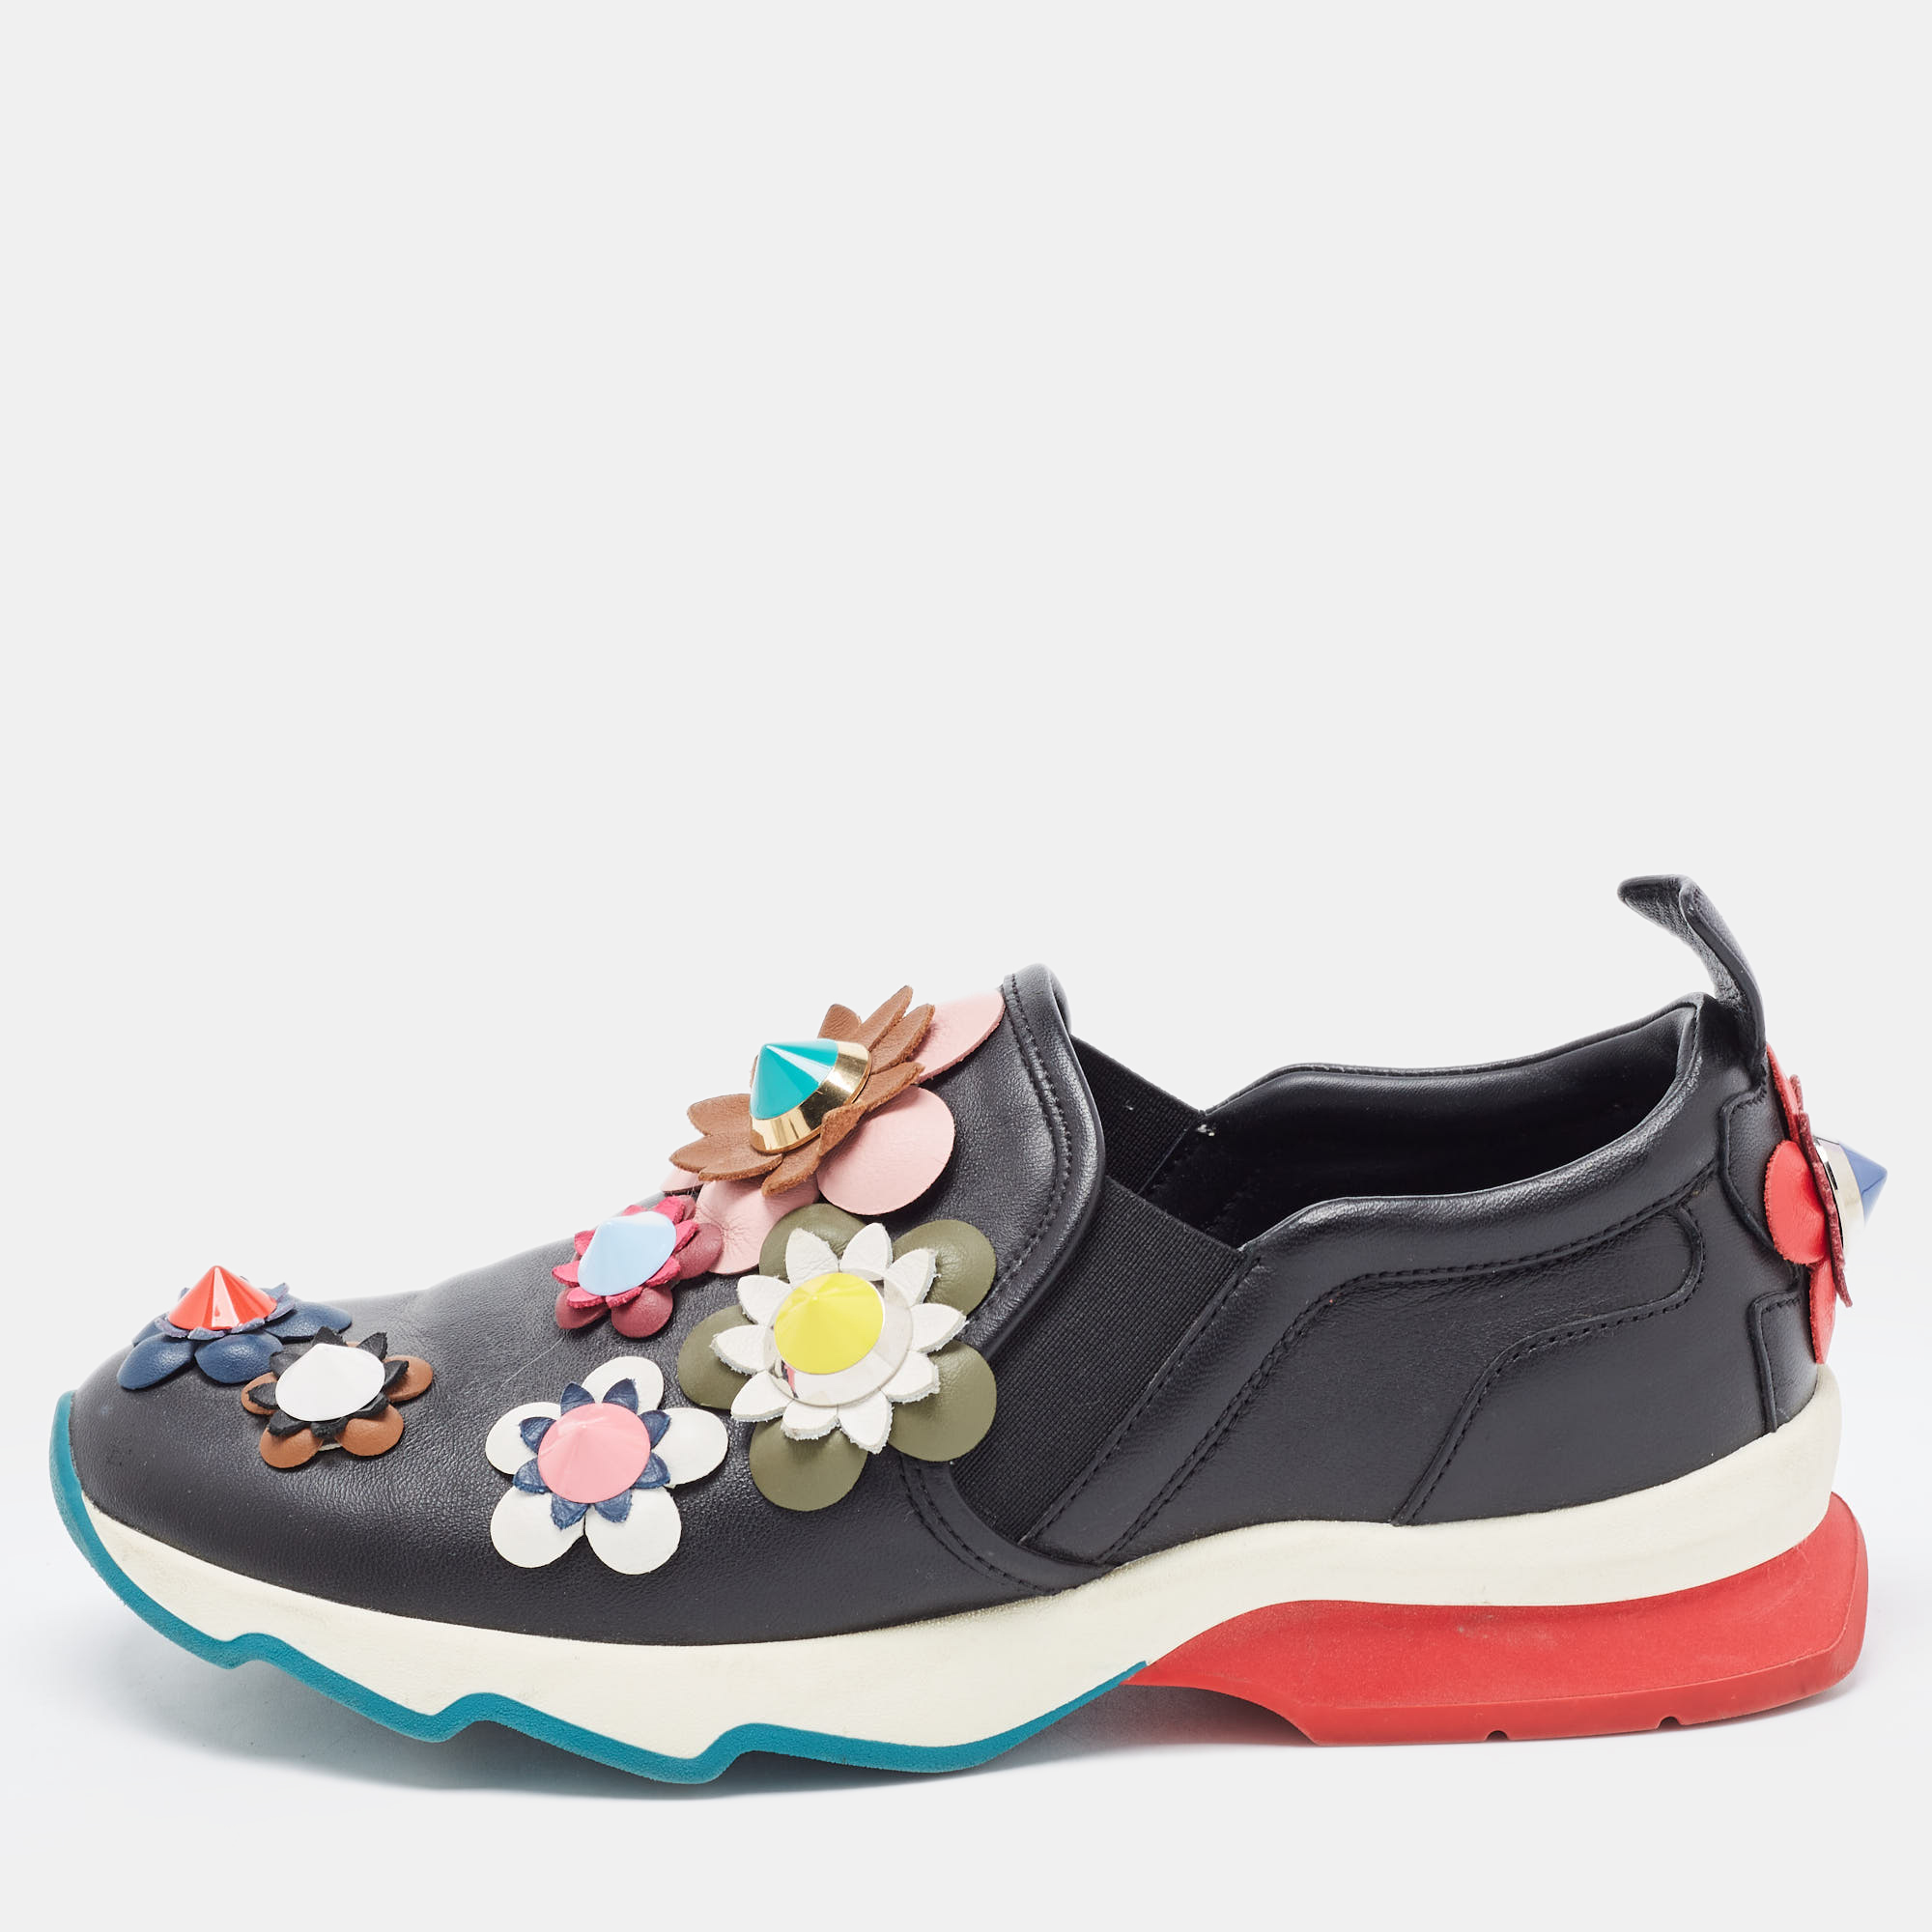 Fendi black leather flowerland embellished slip on sneakers size 35